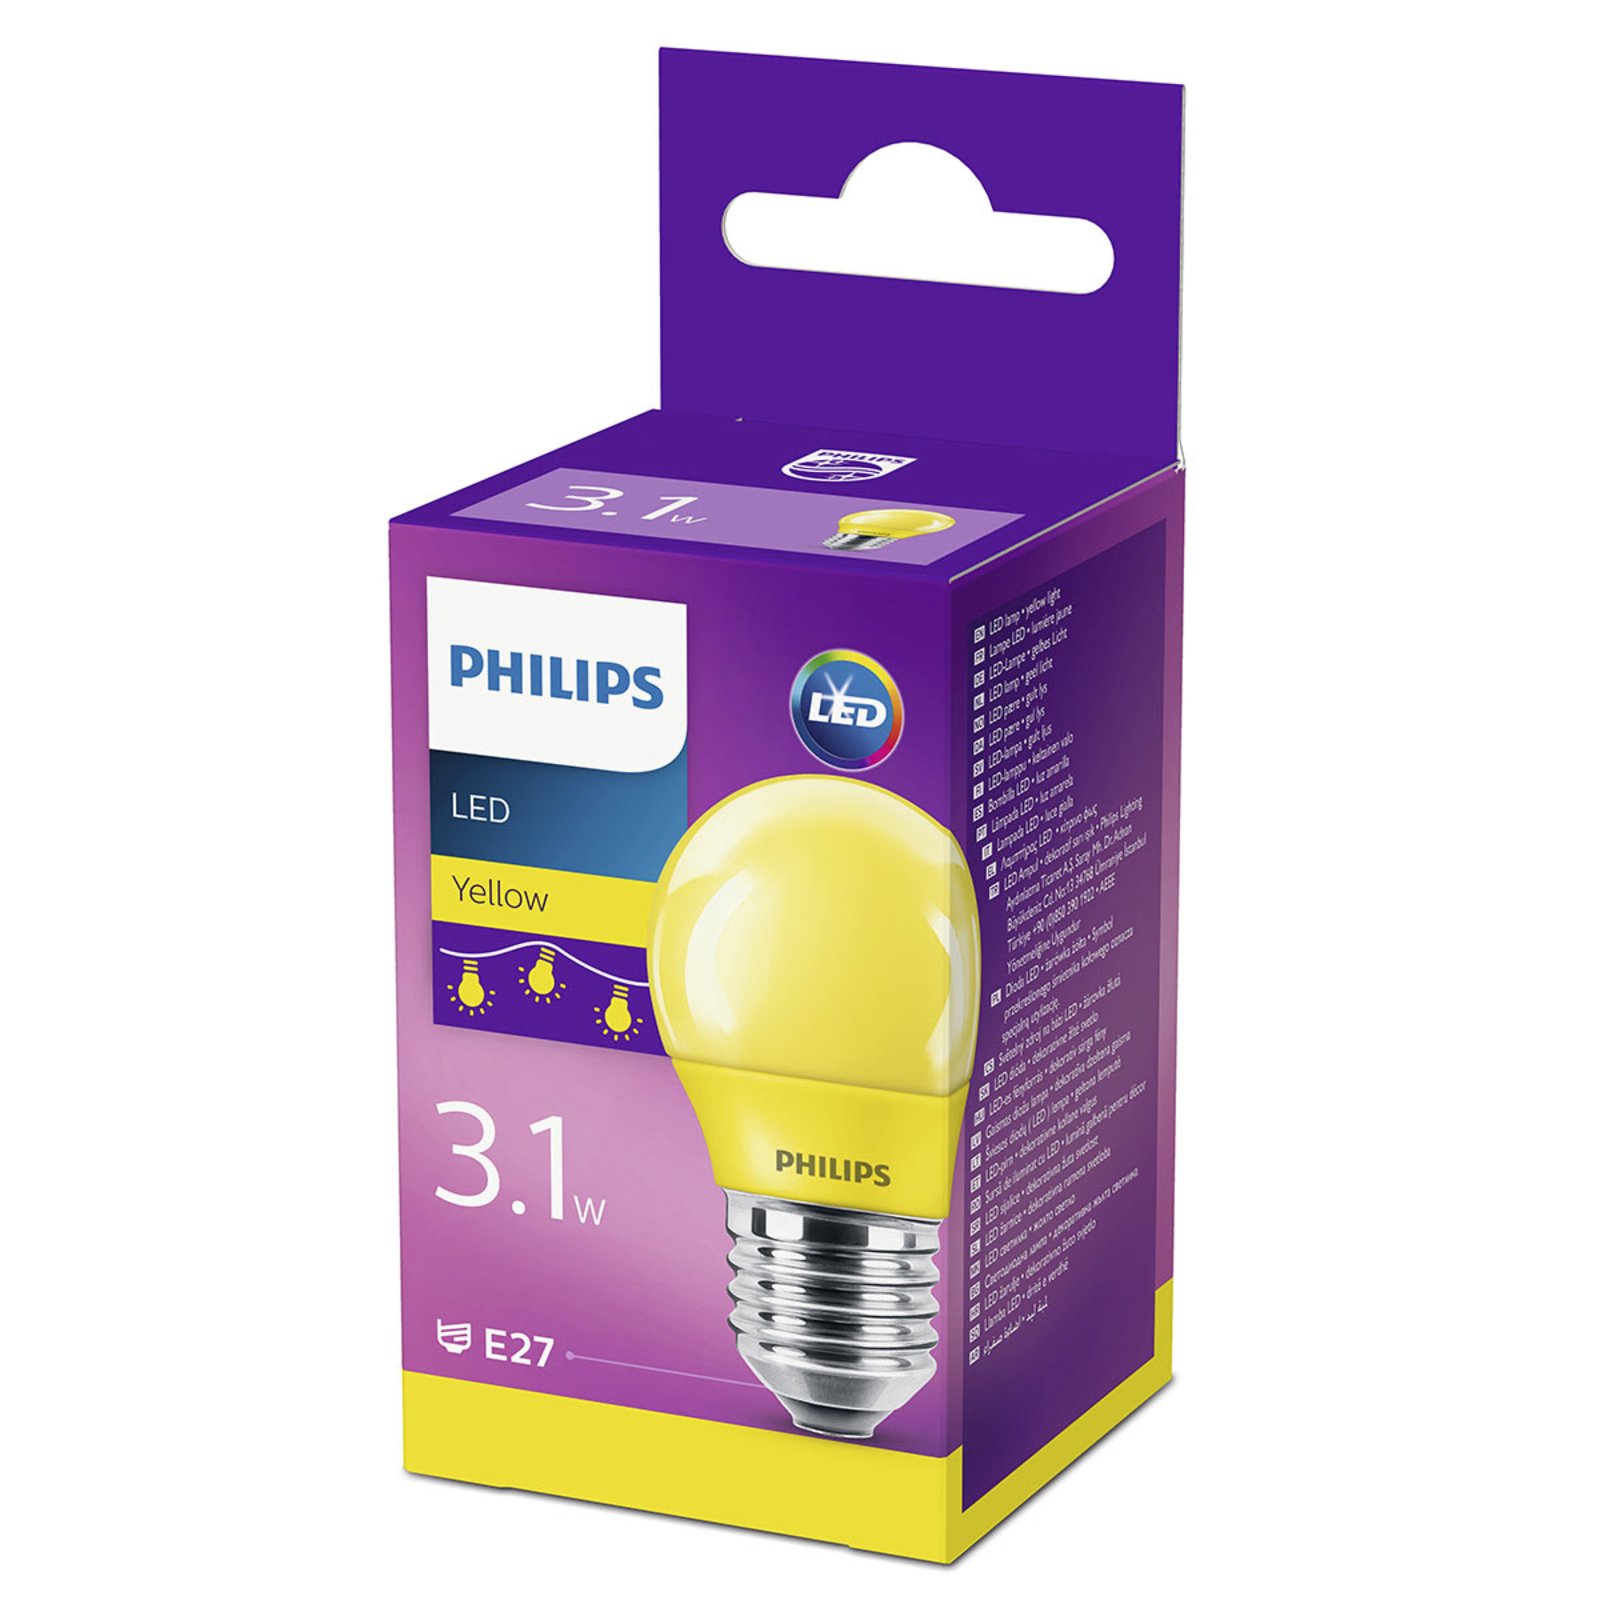 E27 P45 ledlamp 3,1 W, geel